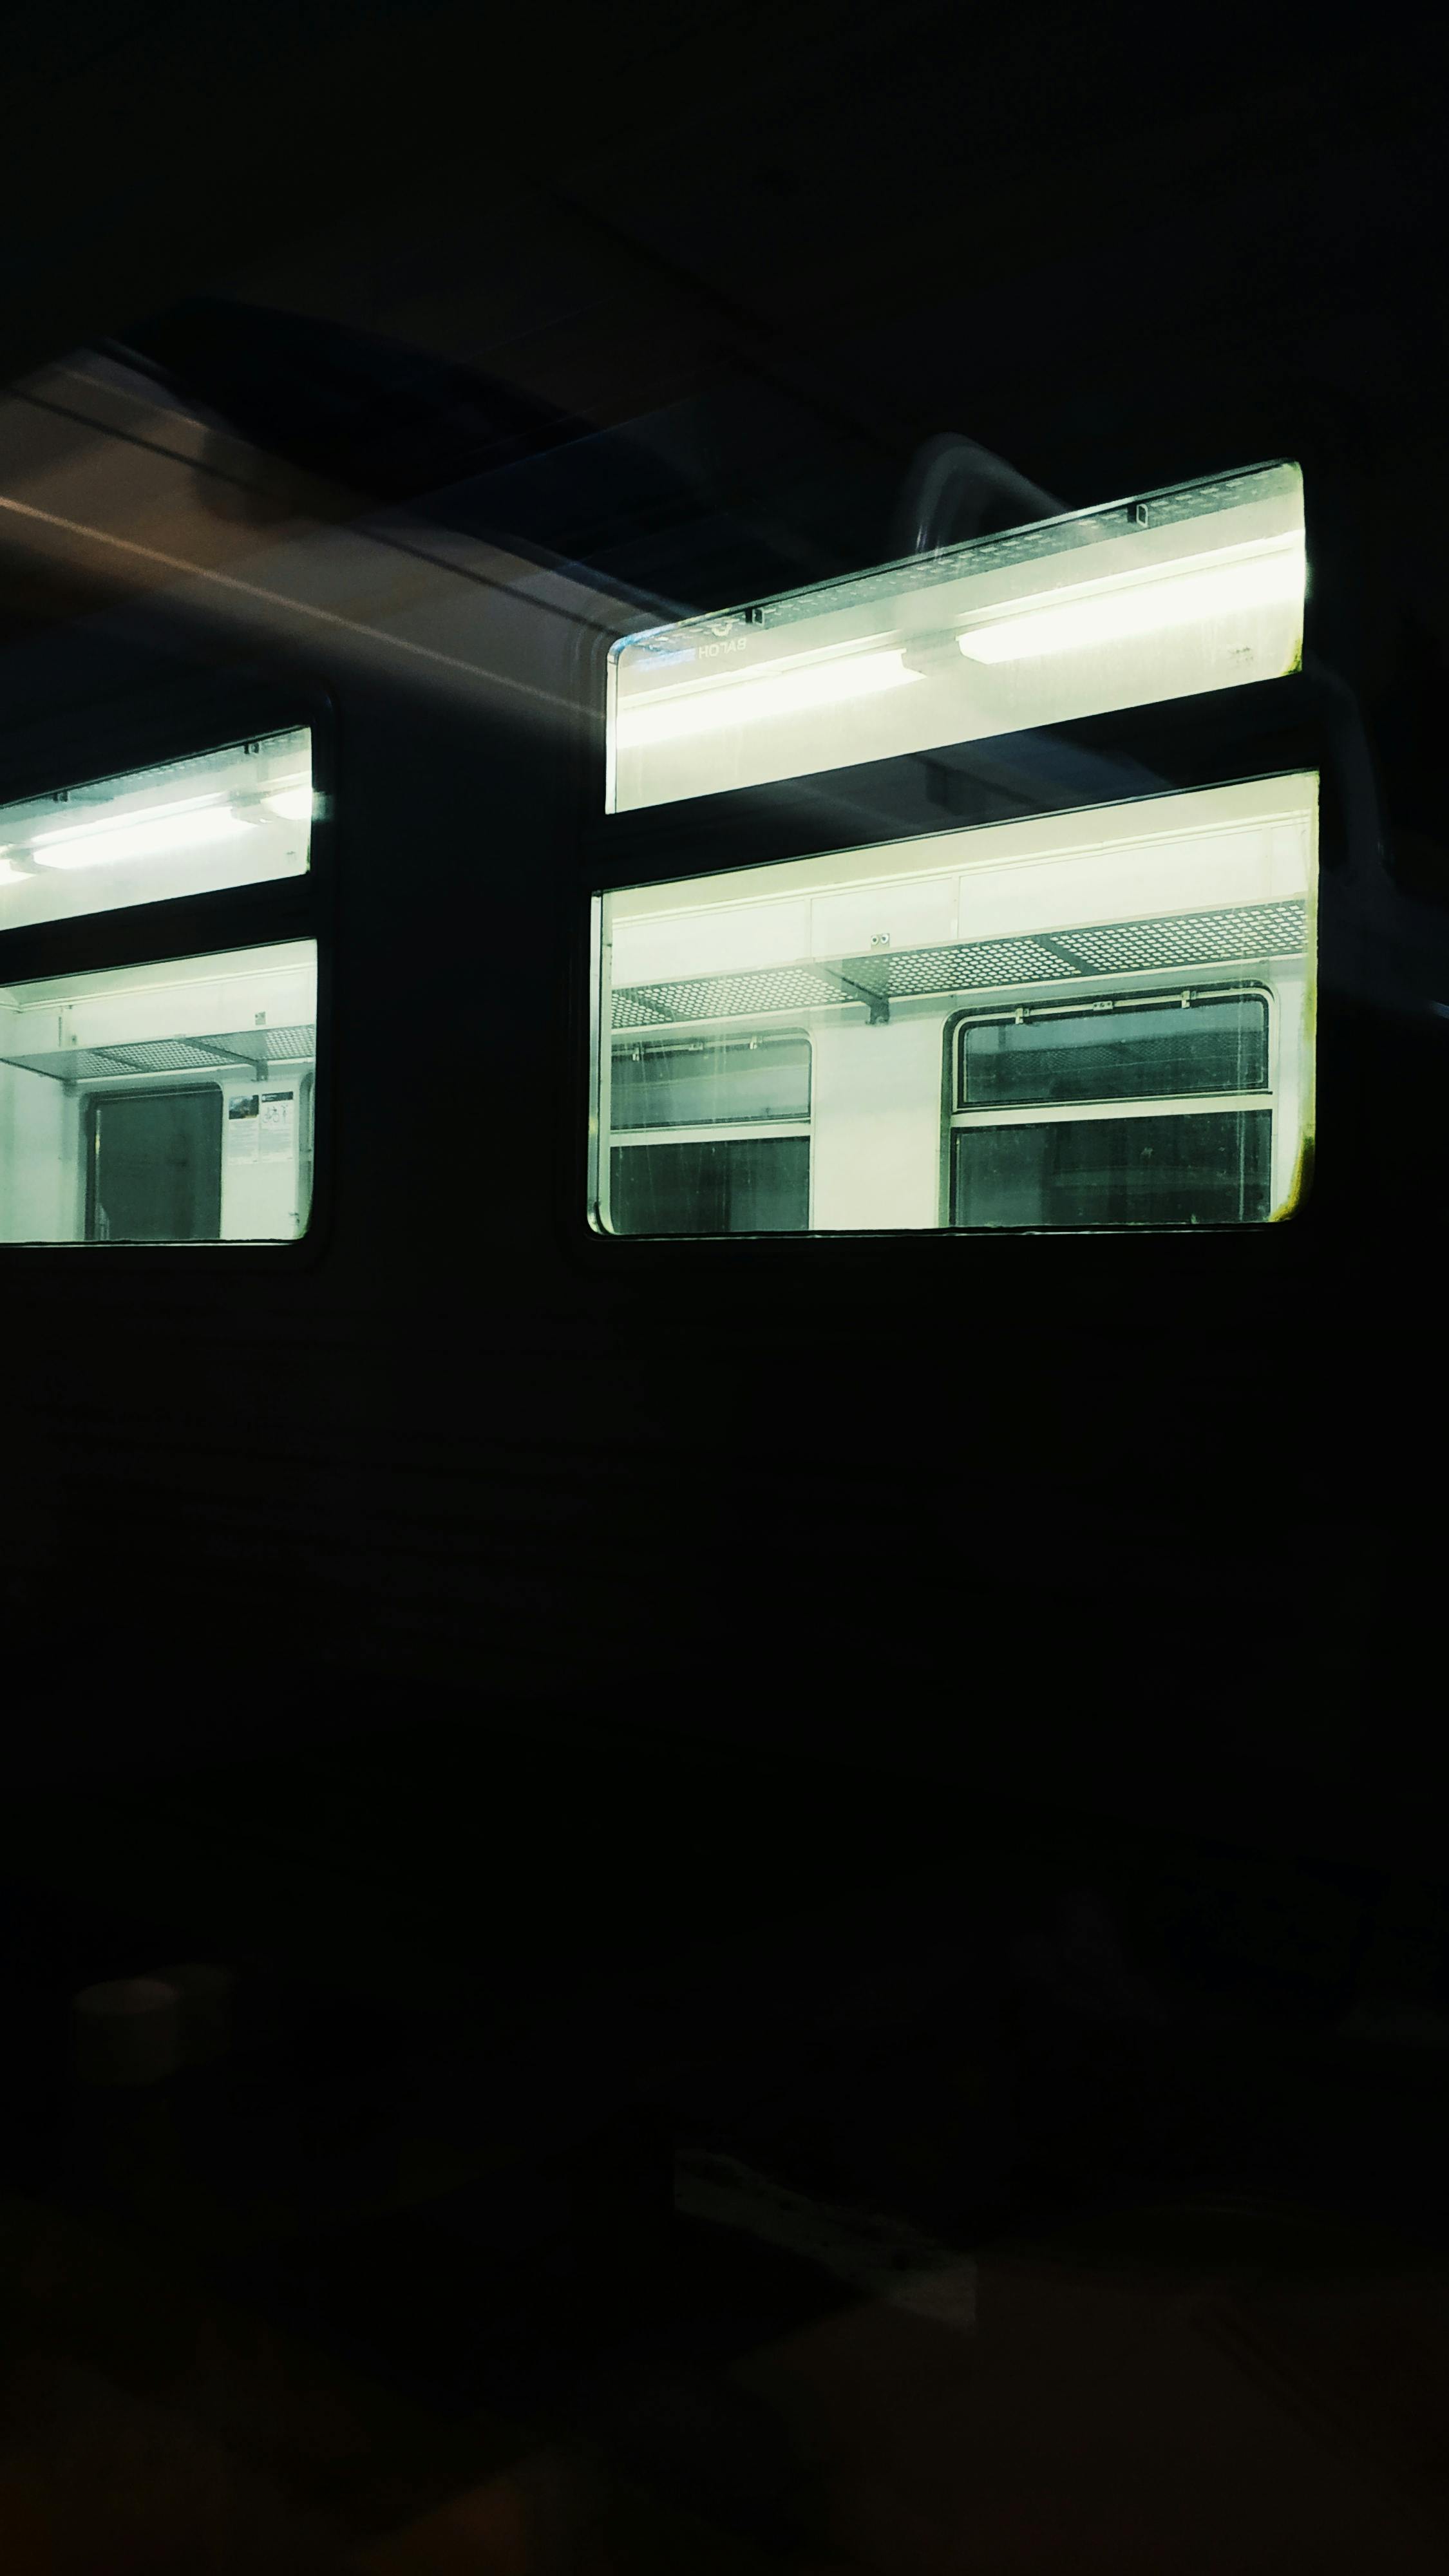 illuminated empty train in darkness